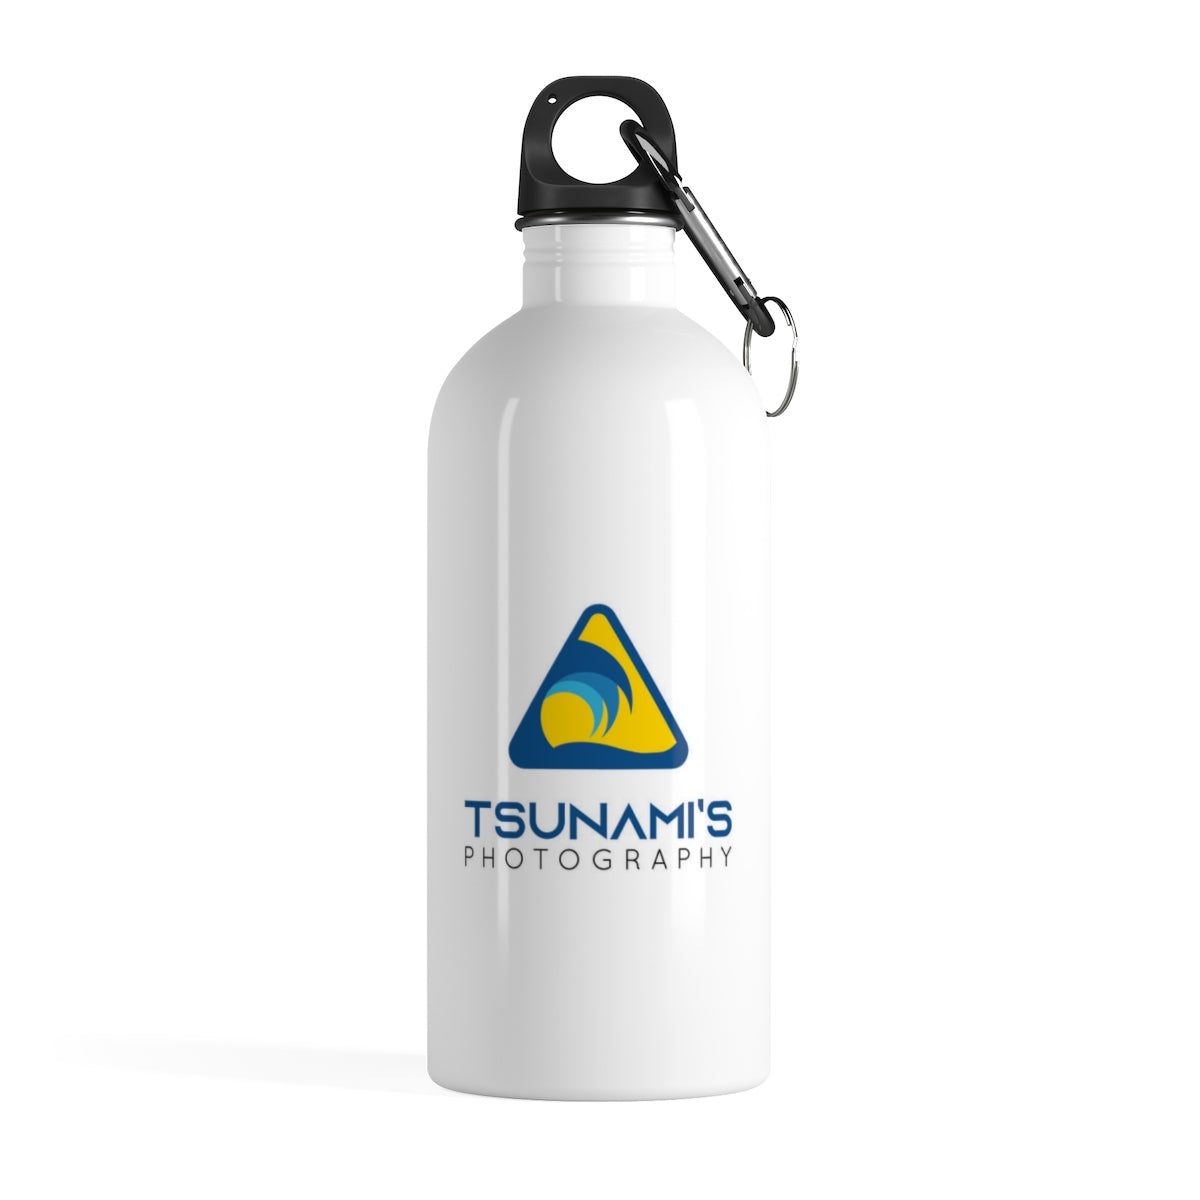 Tsunami's Photography -Stainless Steel Water Bottle - Tsunami's Shop 